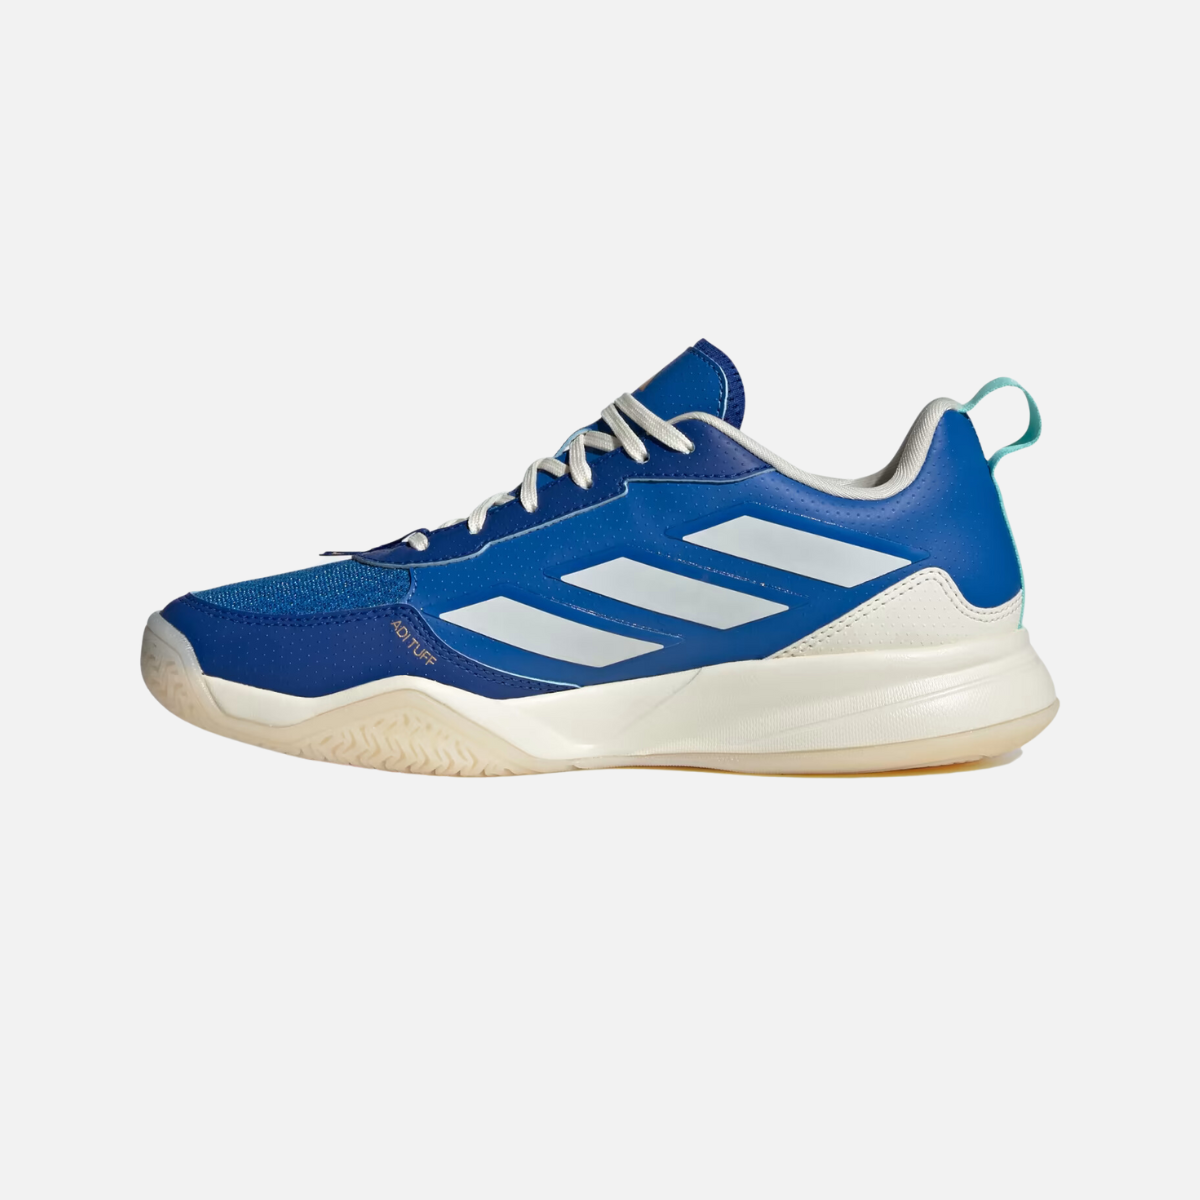 Adidas Avaflash Low Women's Tennis Shoes -Bright Royal/Off White/Royal Blue